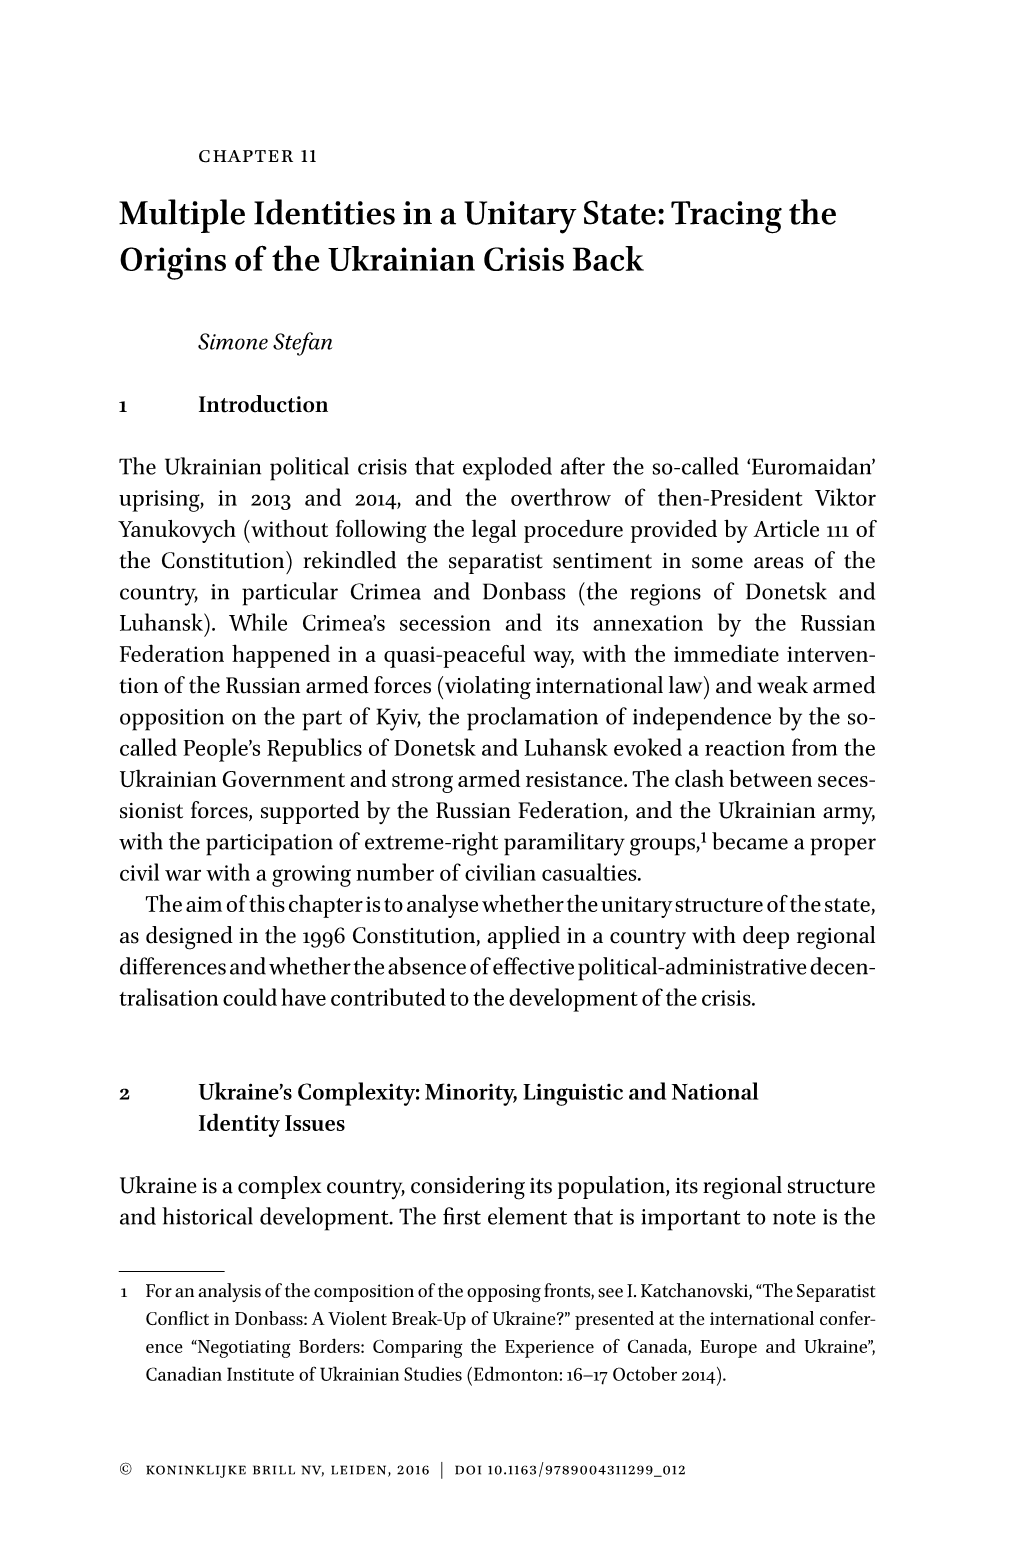 Tracing the Origins of the Ukrainian Crisis Back